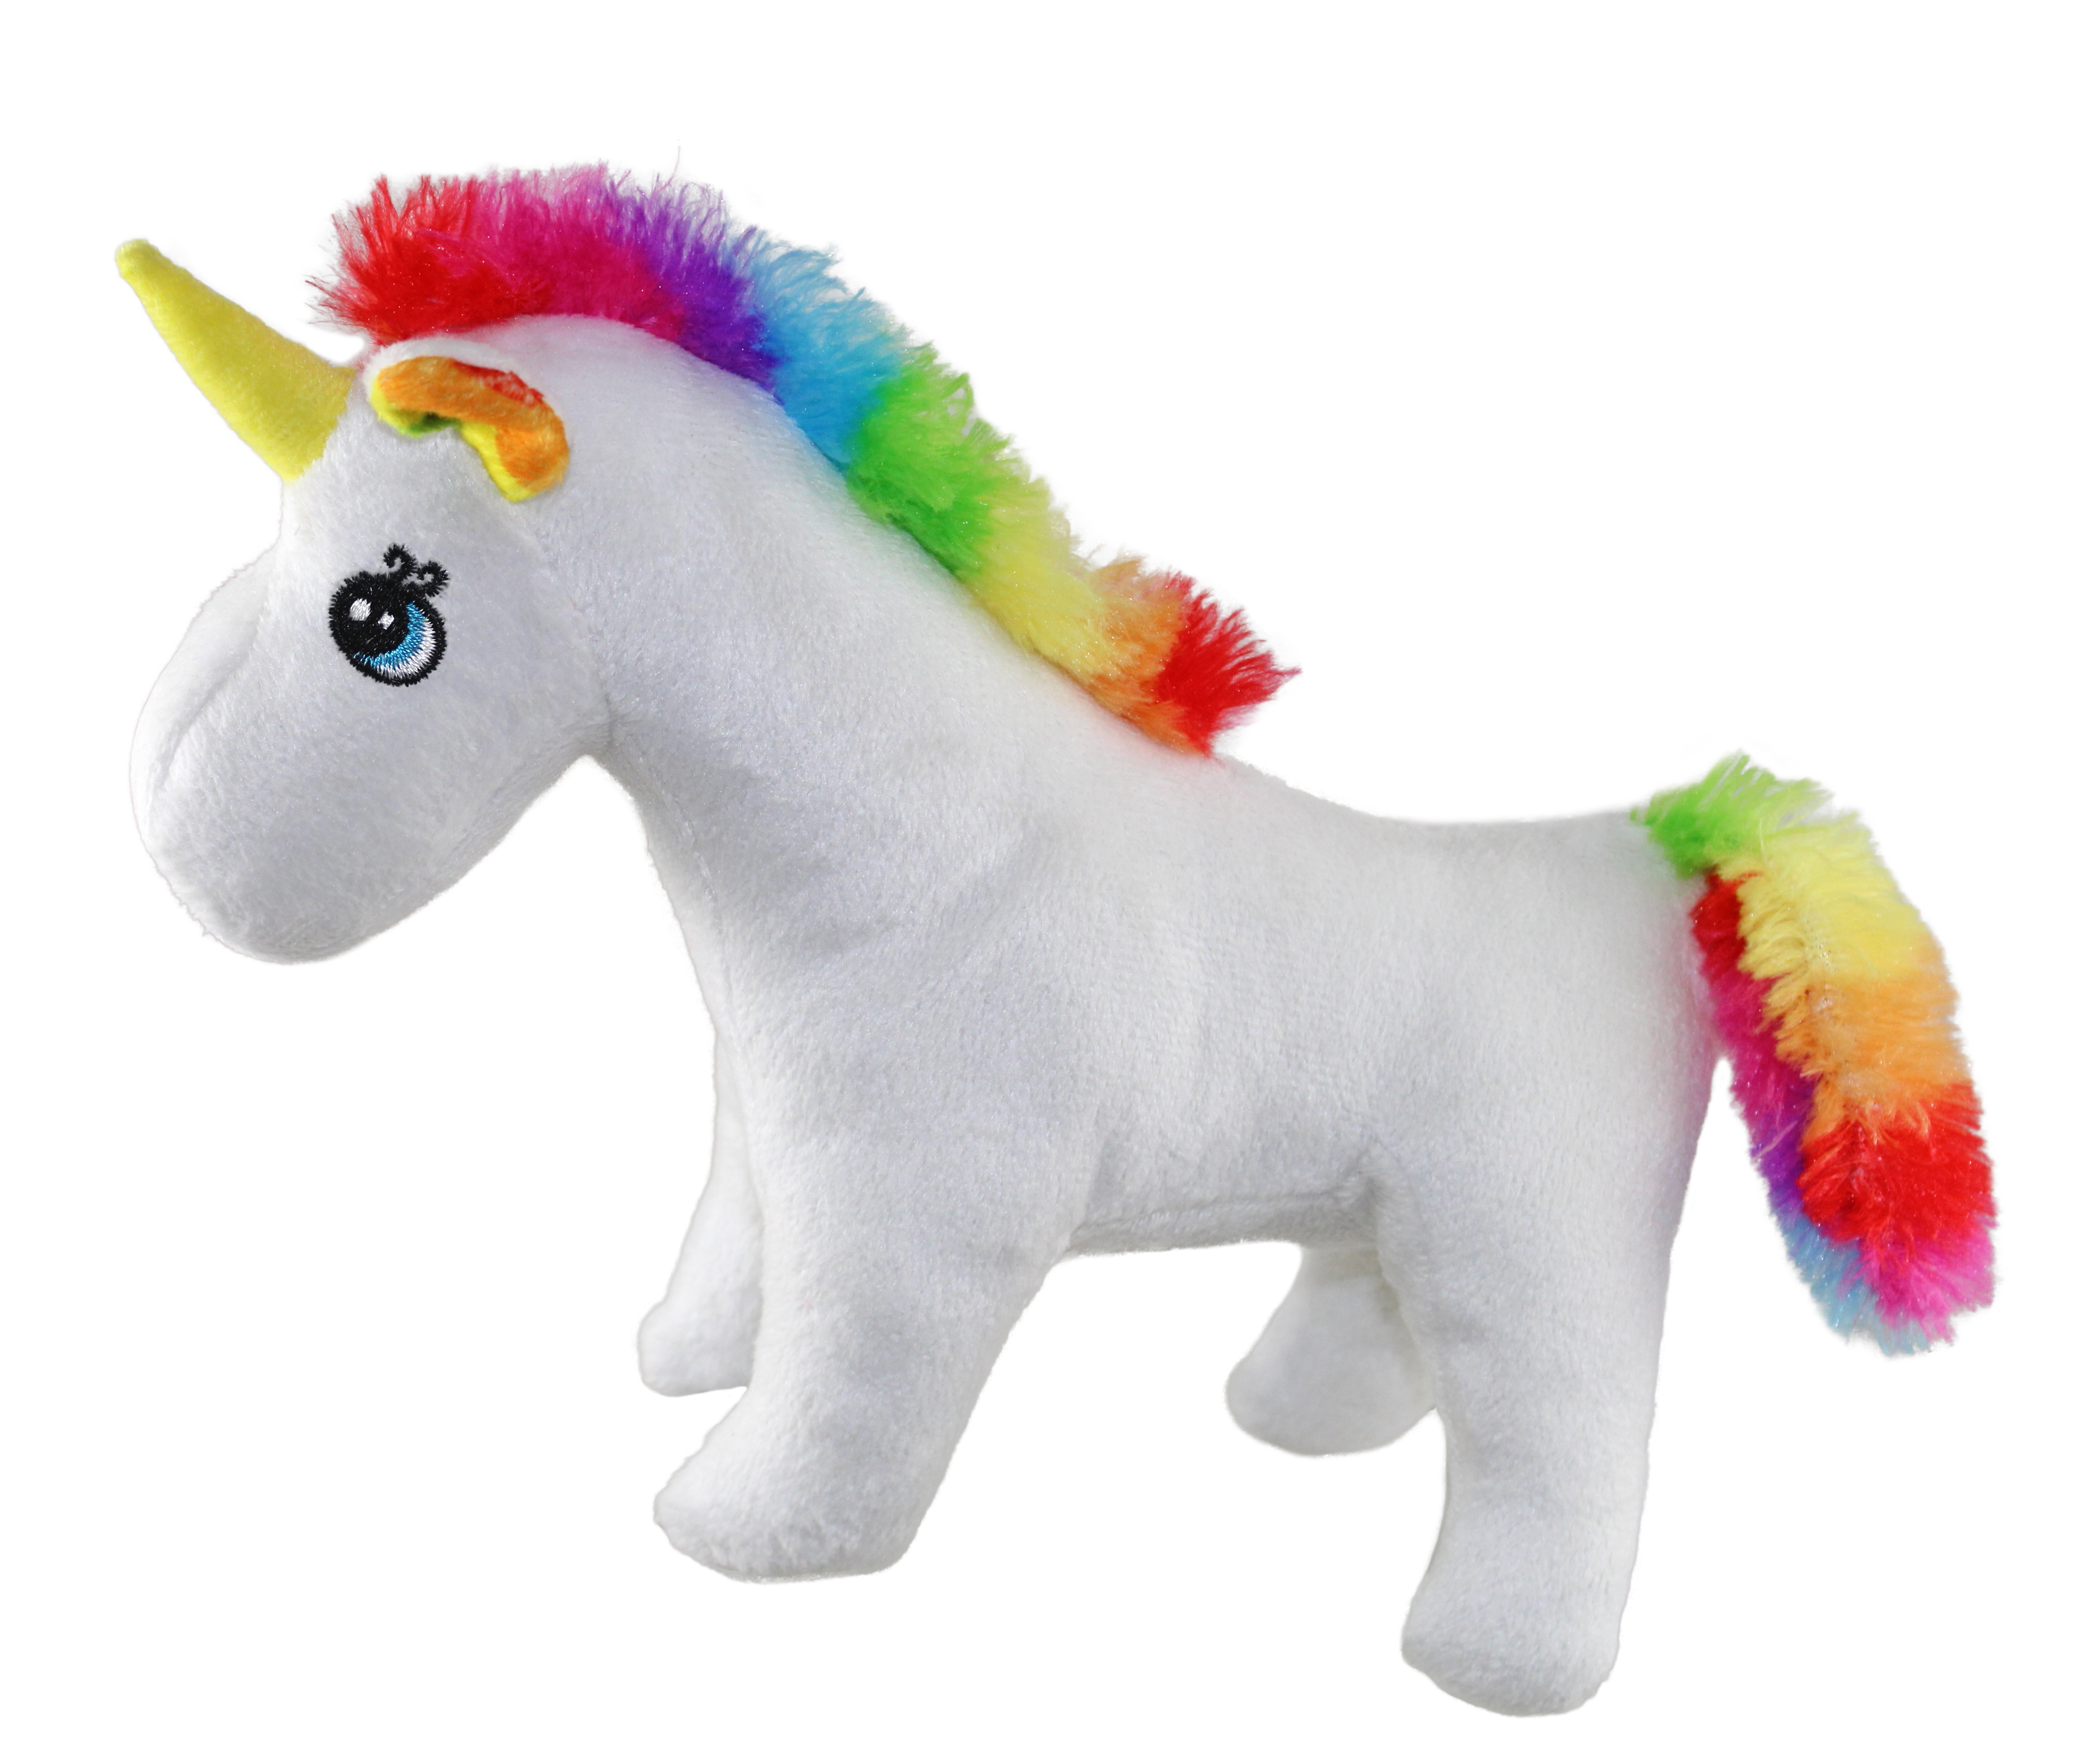 Plush Pal 11" Soft & Fluffy White Unicorn Stuffed Animal Toy with Rainbow Tail And Mane - image 5 of 5